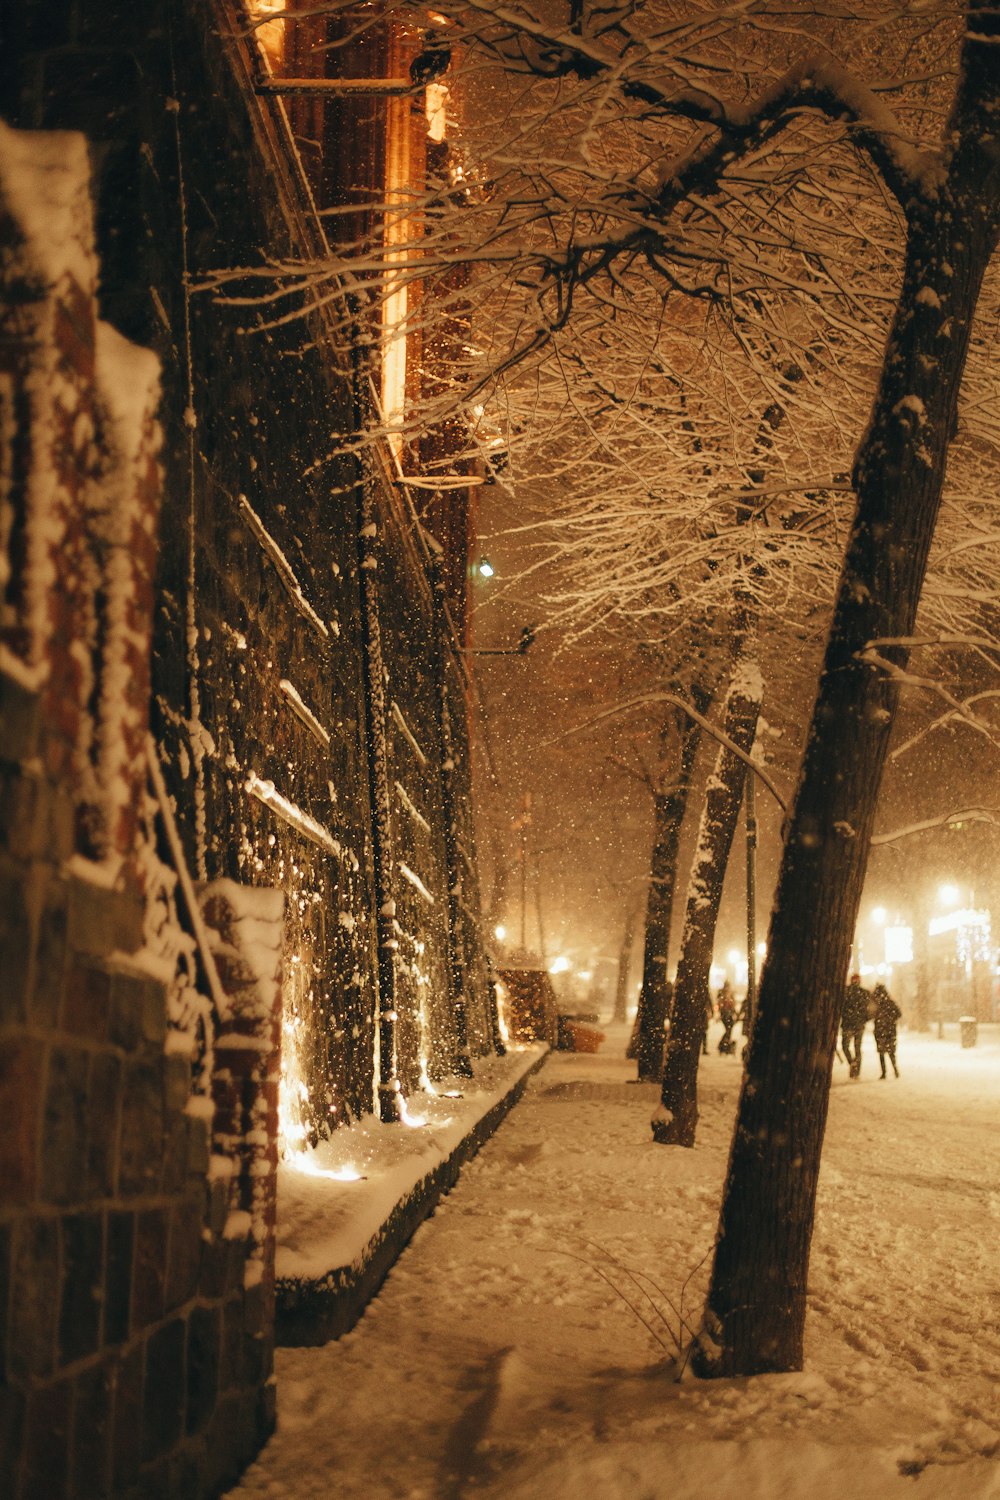 a snowy street with people walking on it